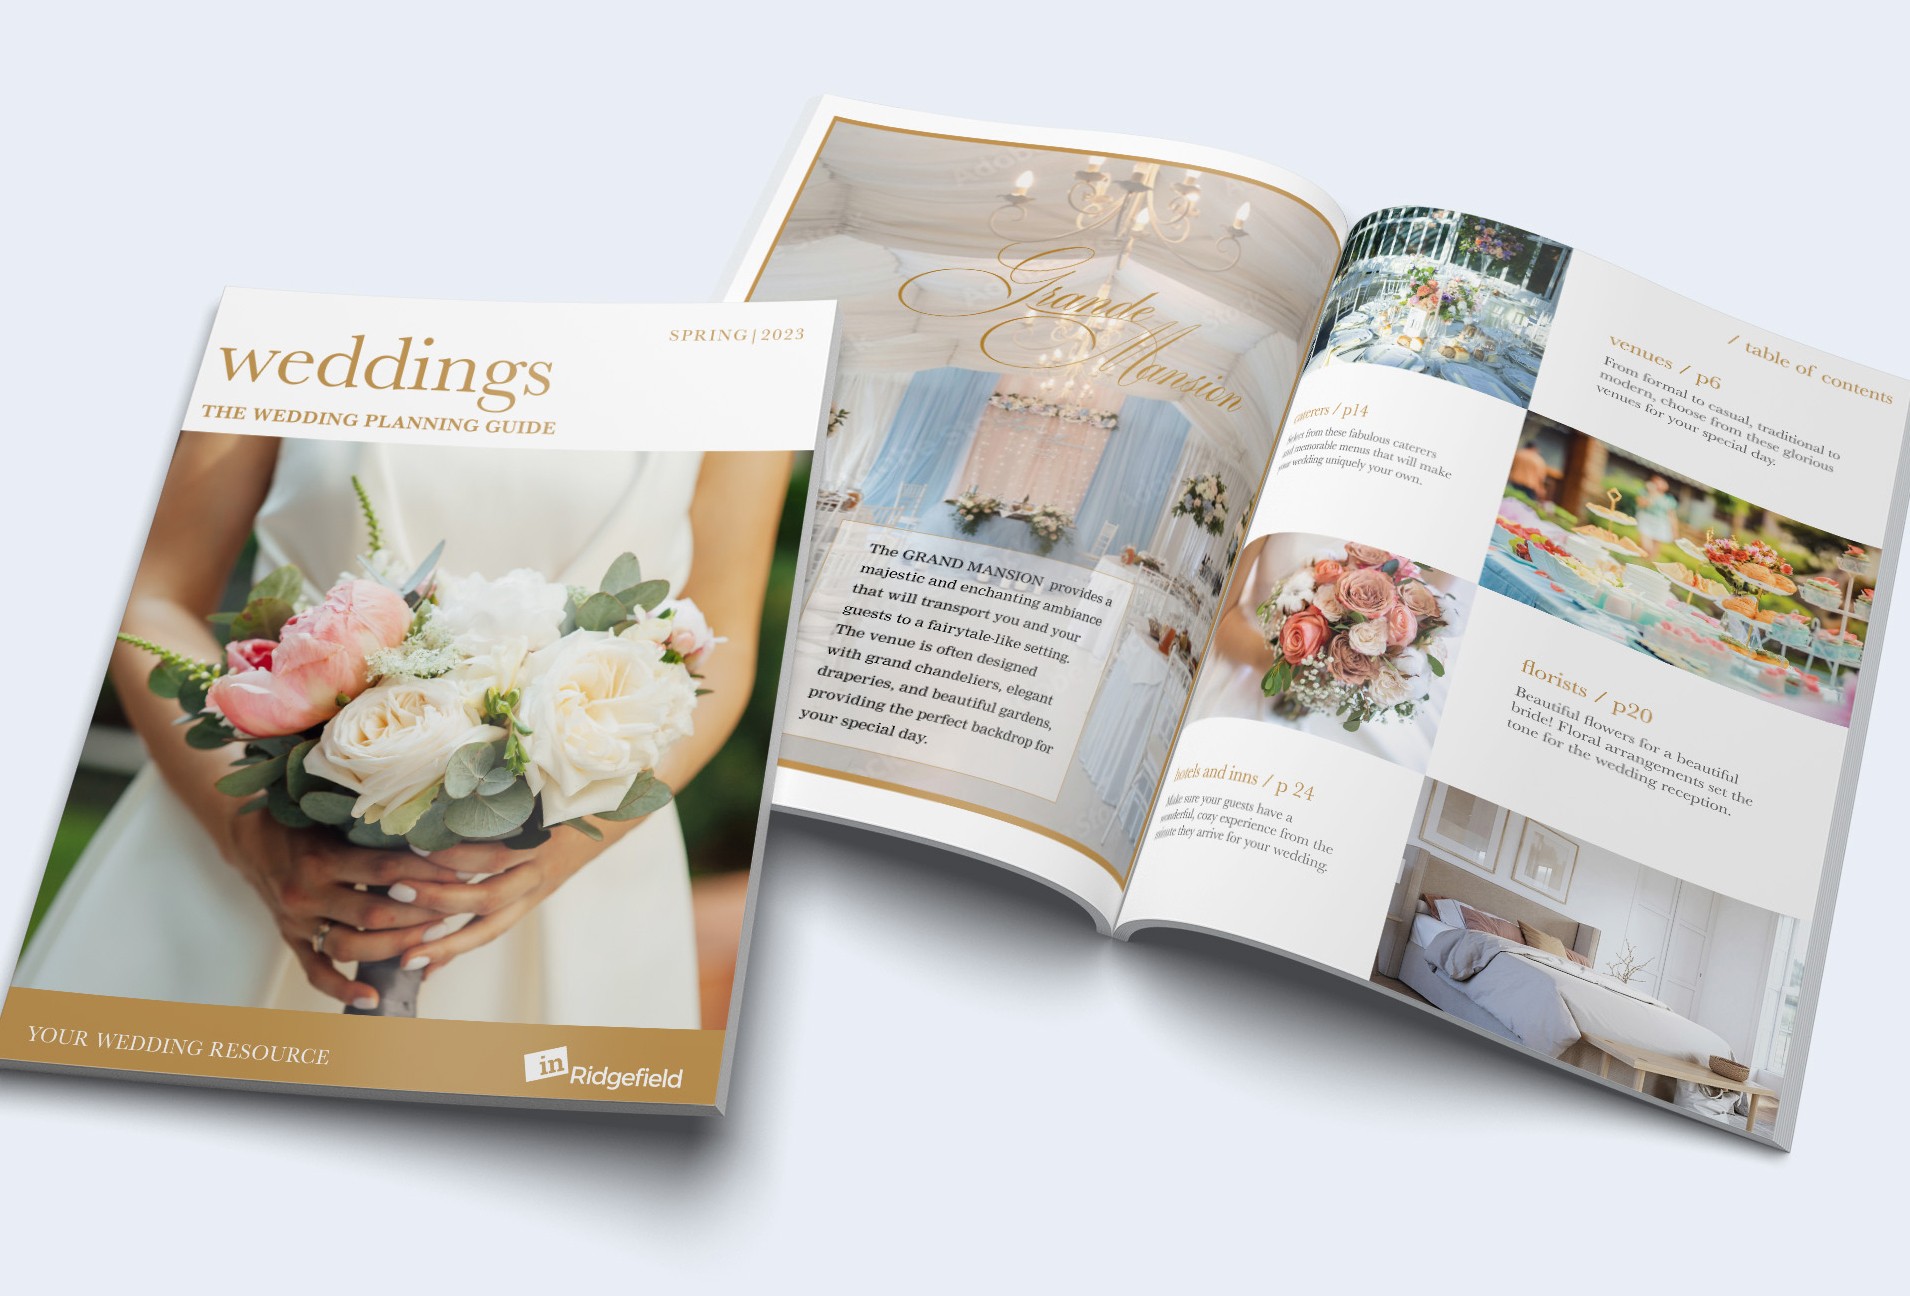 inRidgefield Wedding Planning Guide Ridgefield CT